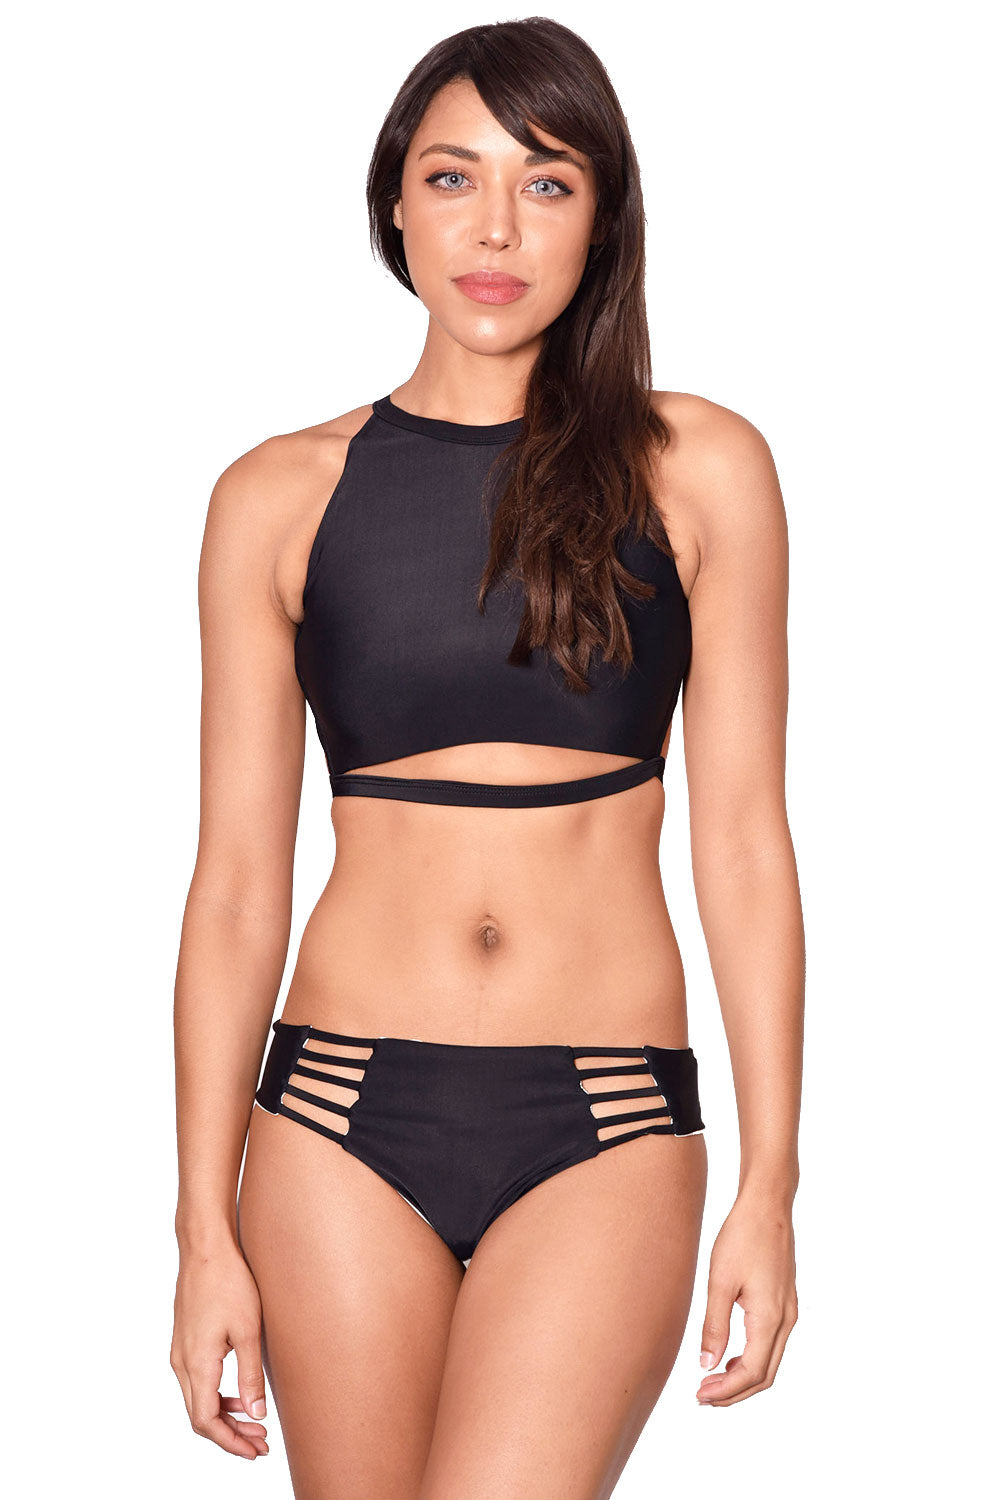 BLACK Cropped Bikini Top by Maya Swimwear FRONT